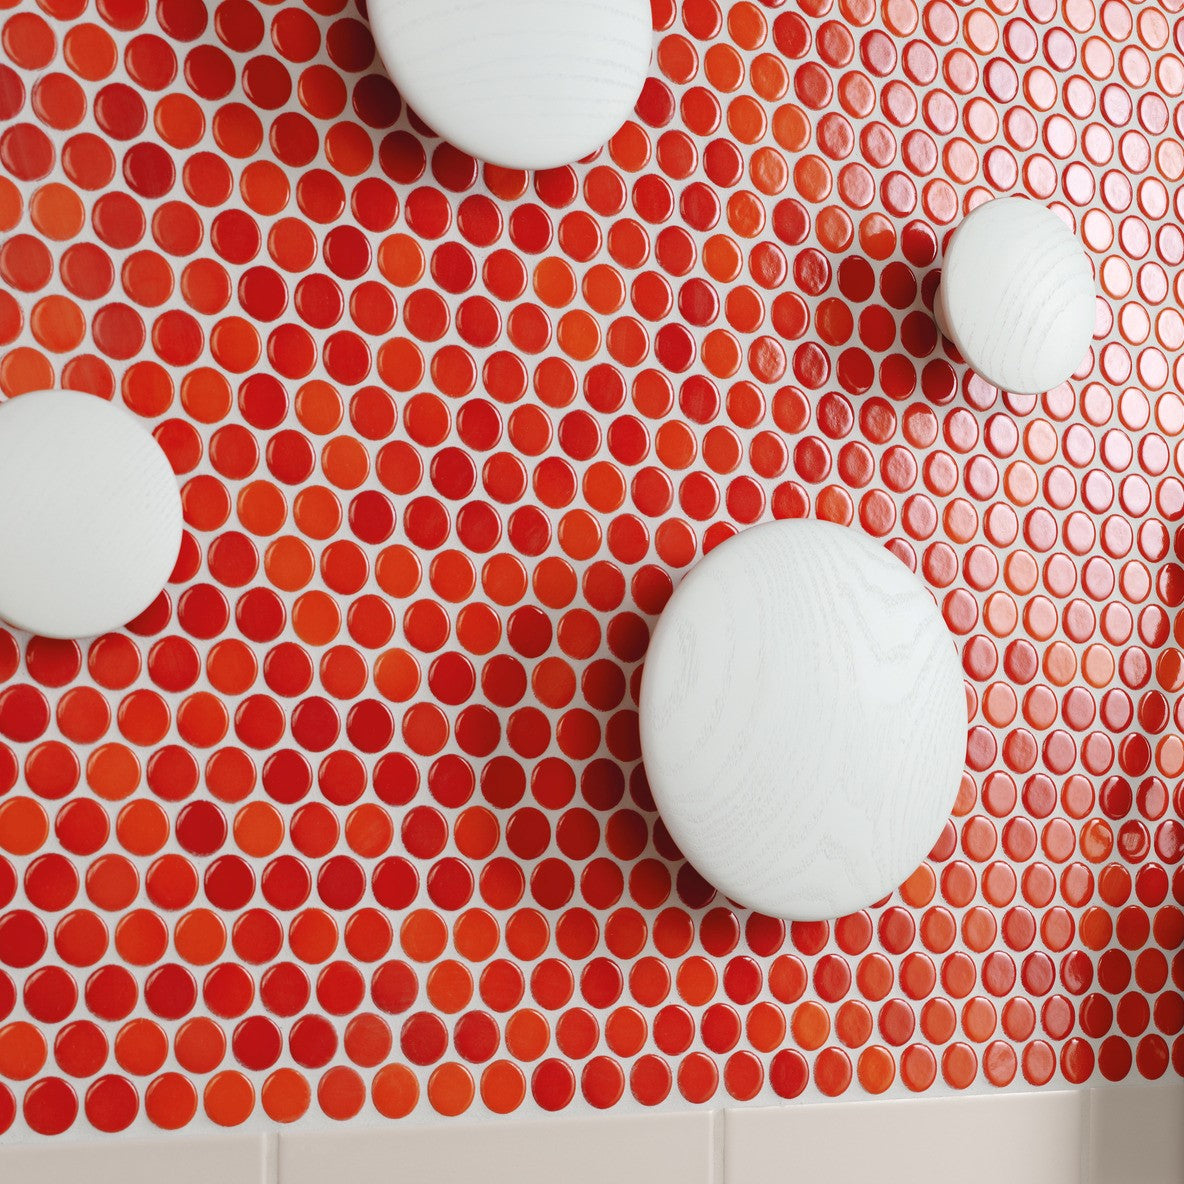 Modwalls PopDotz Porcelain Penny Round Tile | Cinnamon | Colorful Modern & Midcentury tile for bathrooms, kitchens, backsplashes, showers, floors, pools & outdoors. 